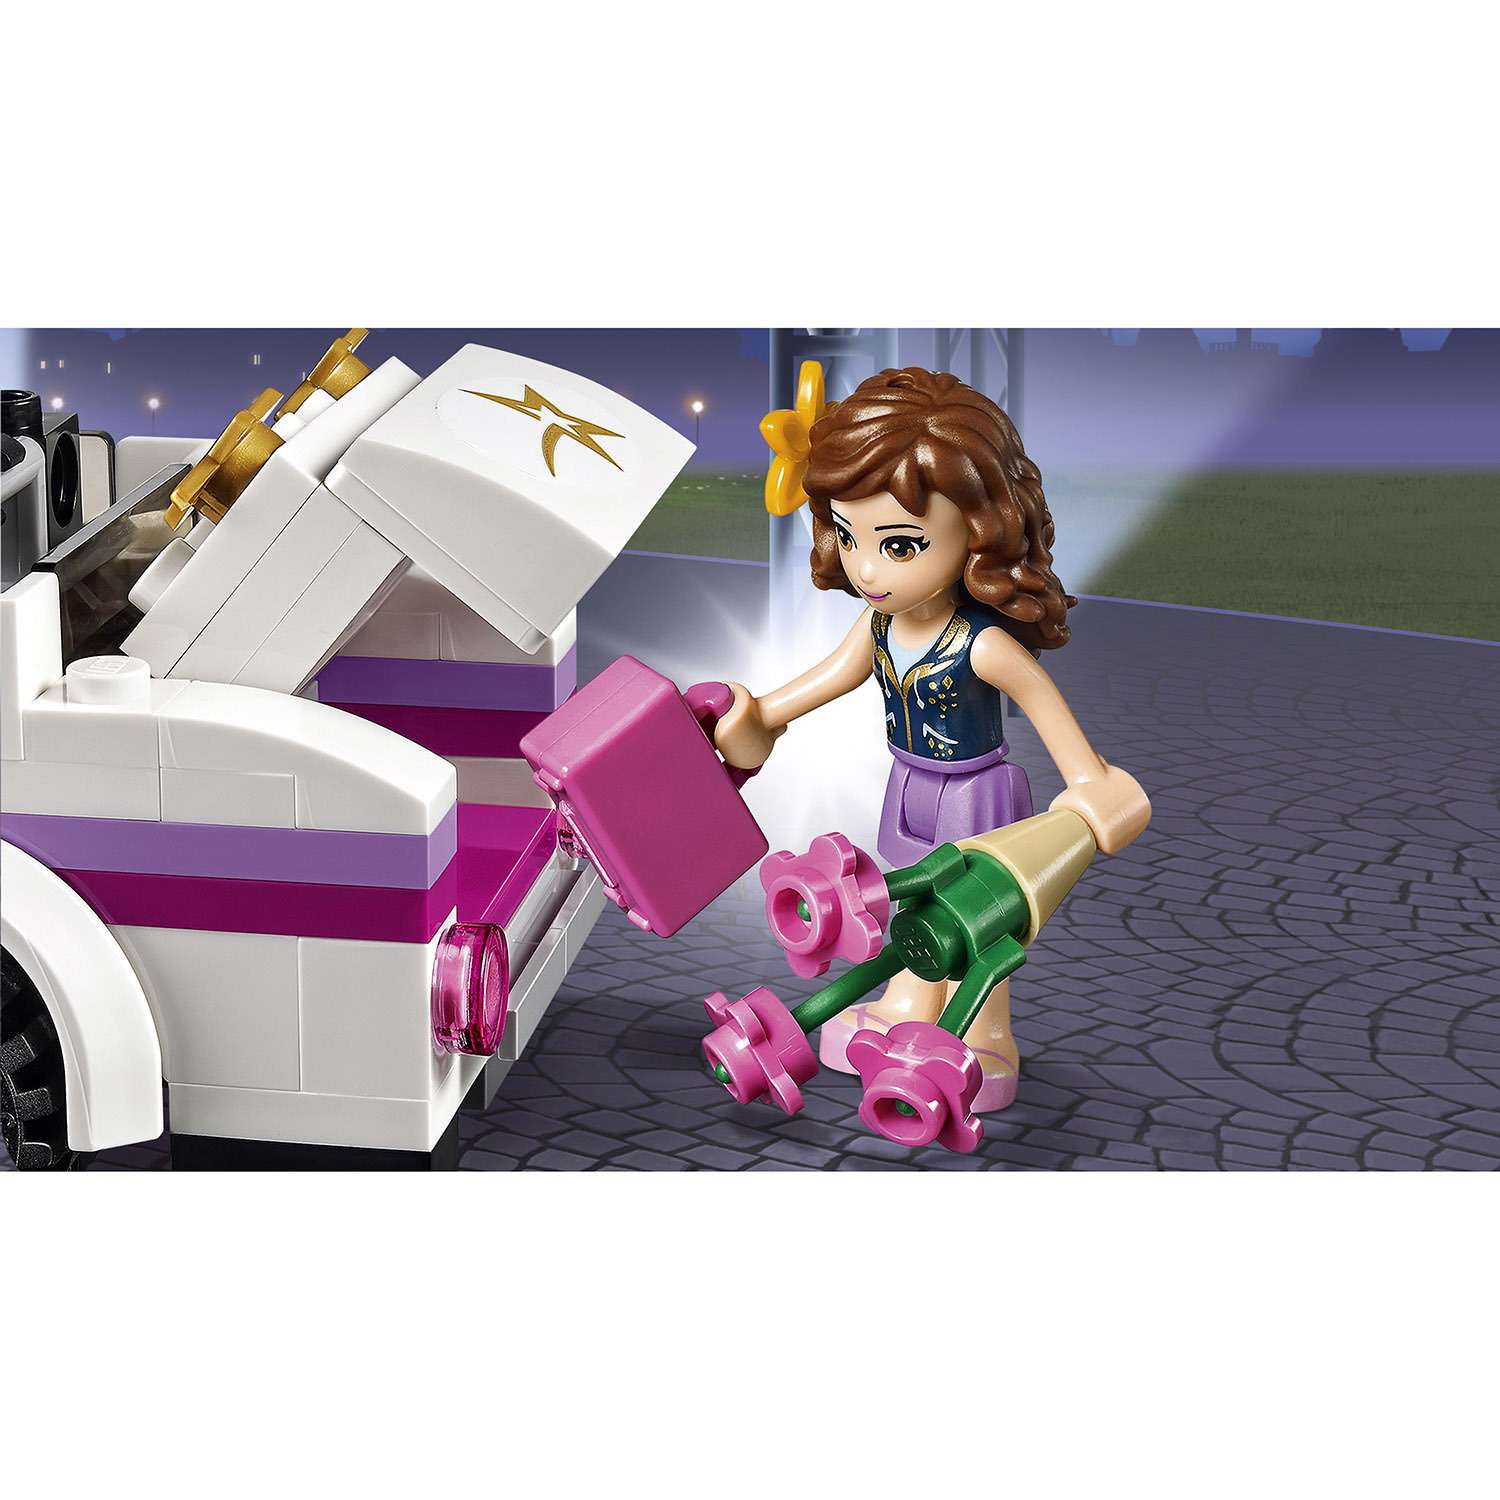 Конструктор LEGO Friends Поп звезда: лимузин (41107) - фото 7